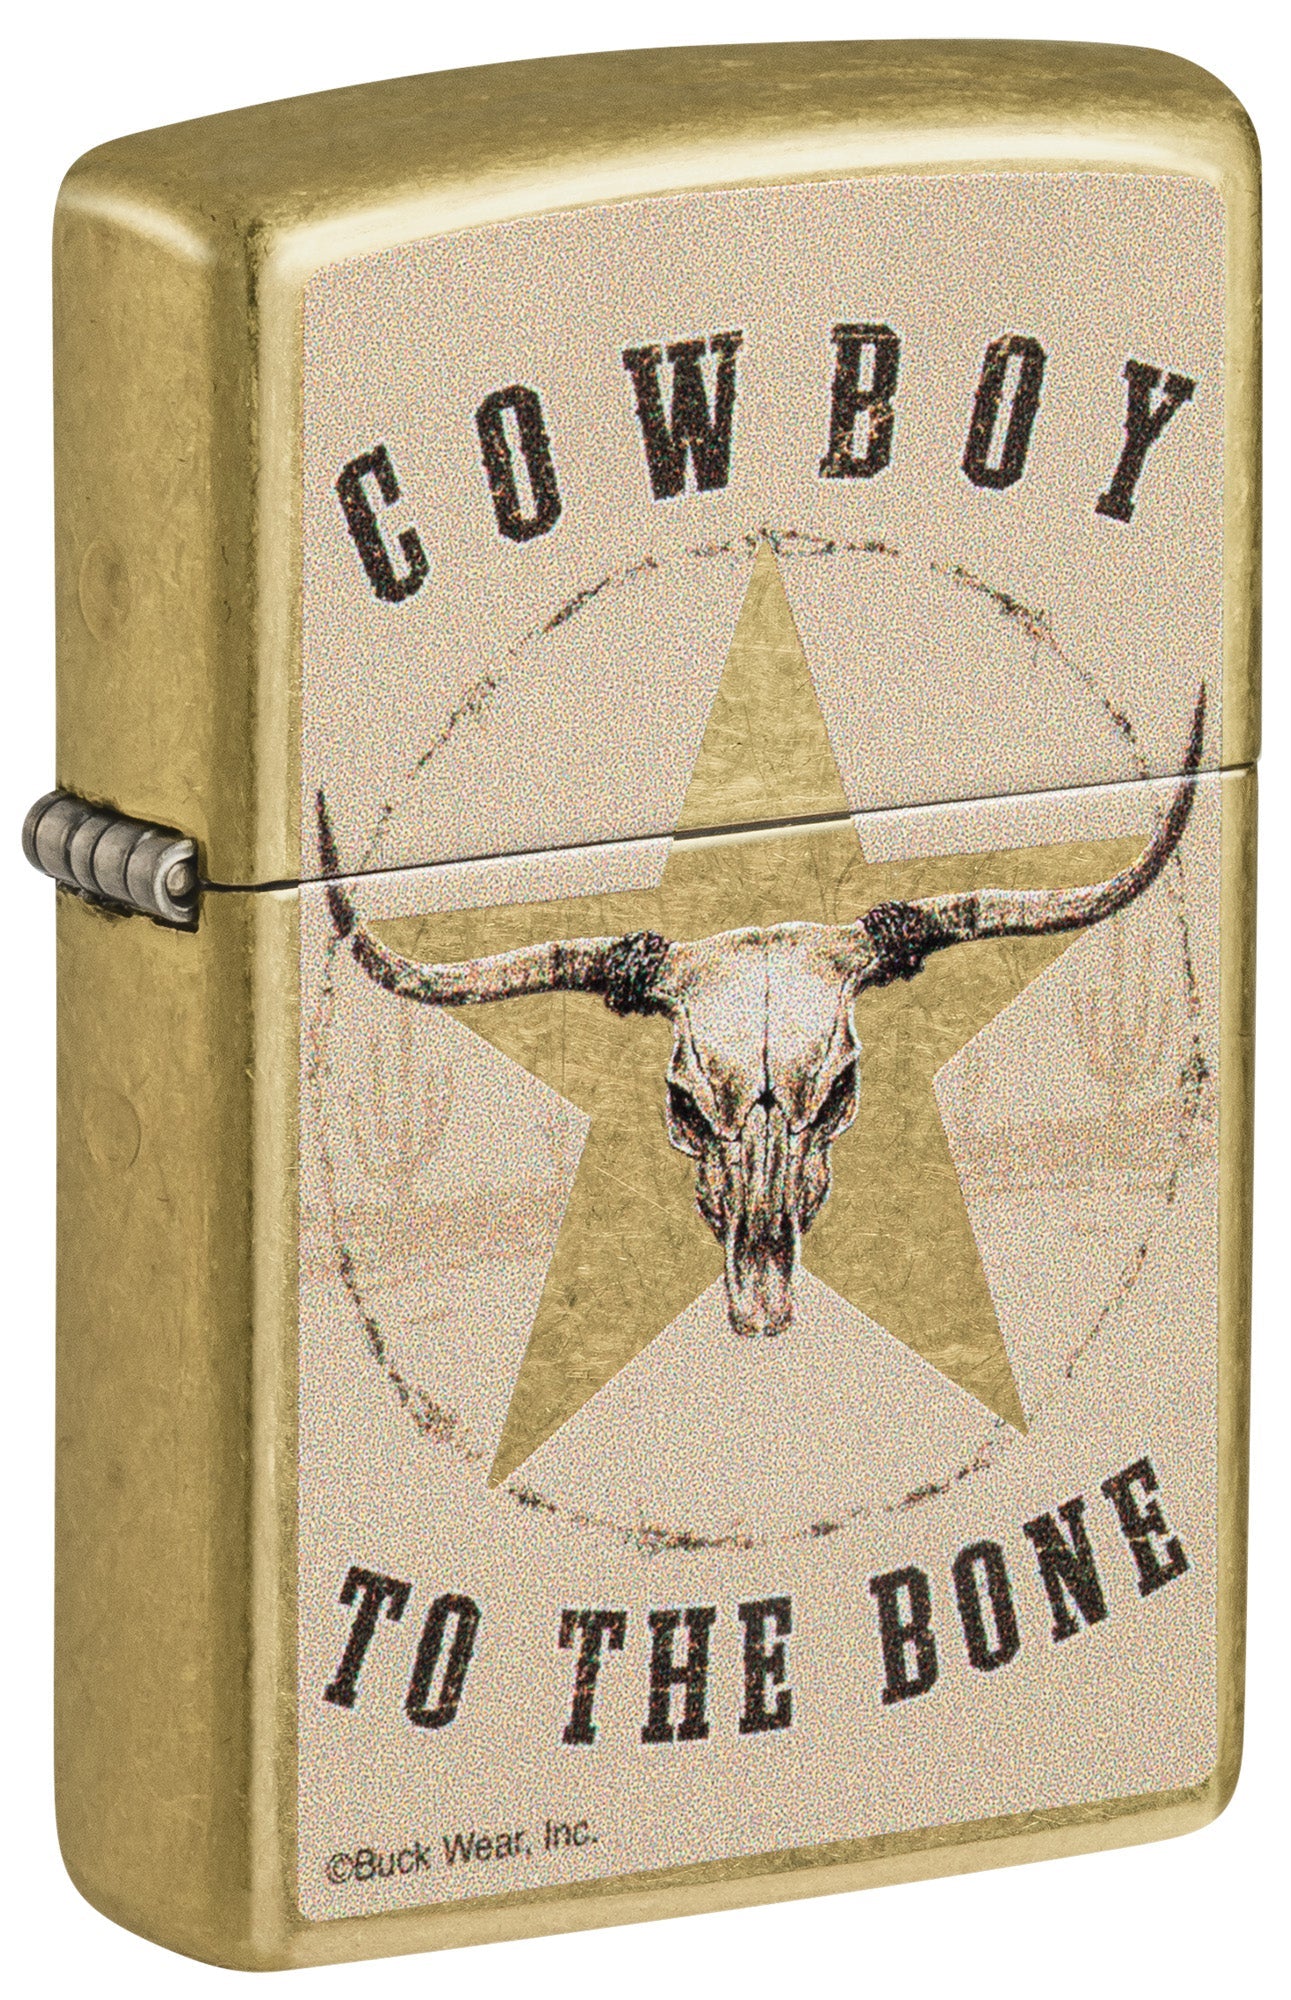 Zippo Lighter: Cowboy to the Bone by Buck Wear - Tumbled Brass 48937